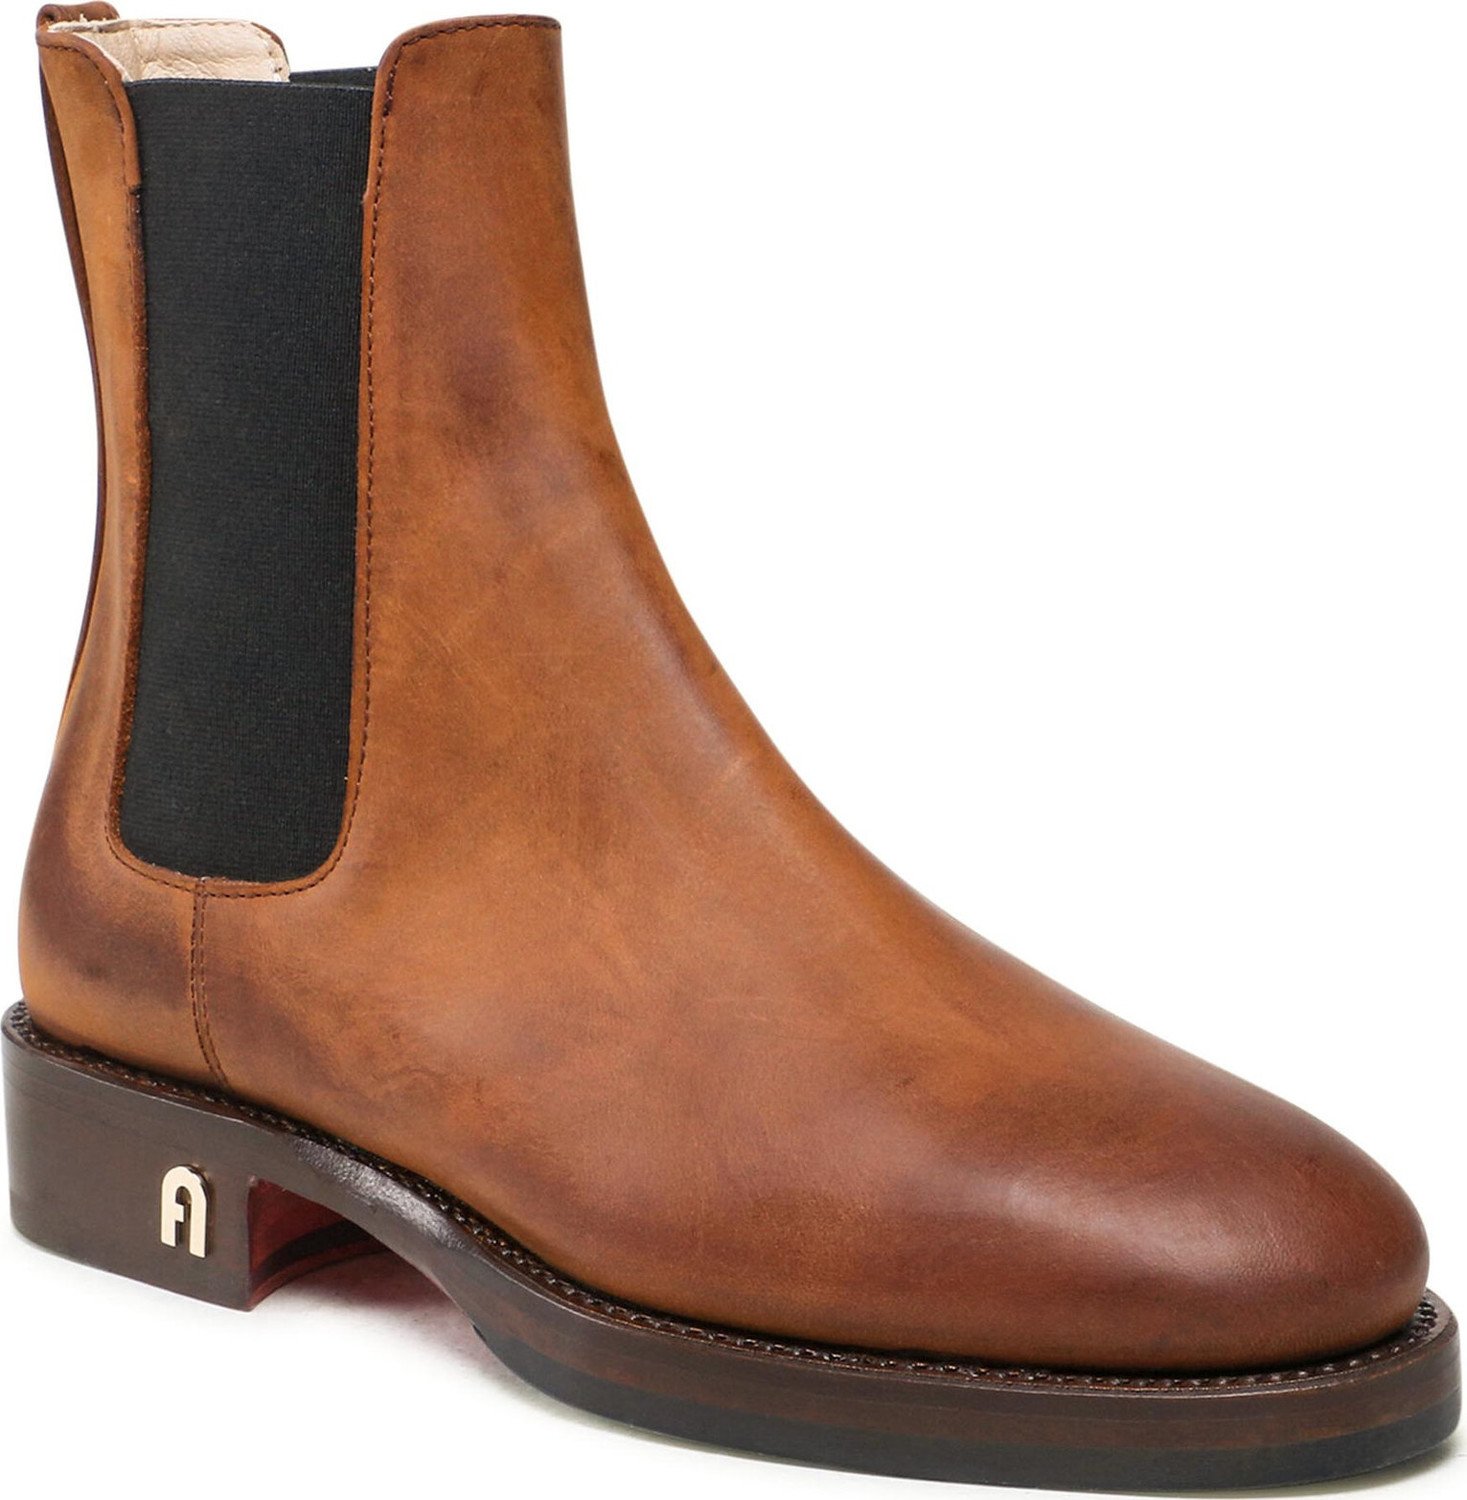 Kotníková obuv s elastickým prvkem Furla Heritage YE58FHE-250000-03B00-1007 Cognac H